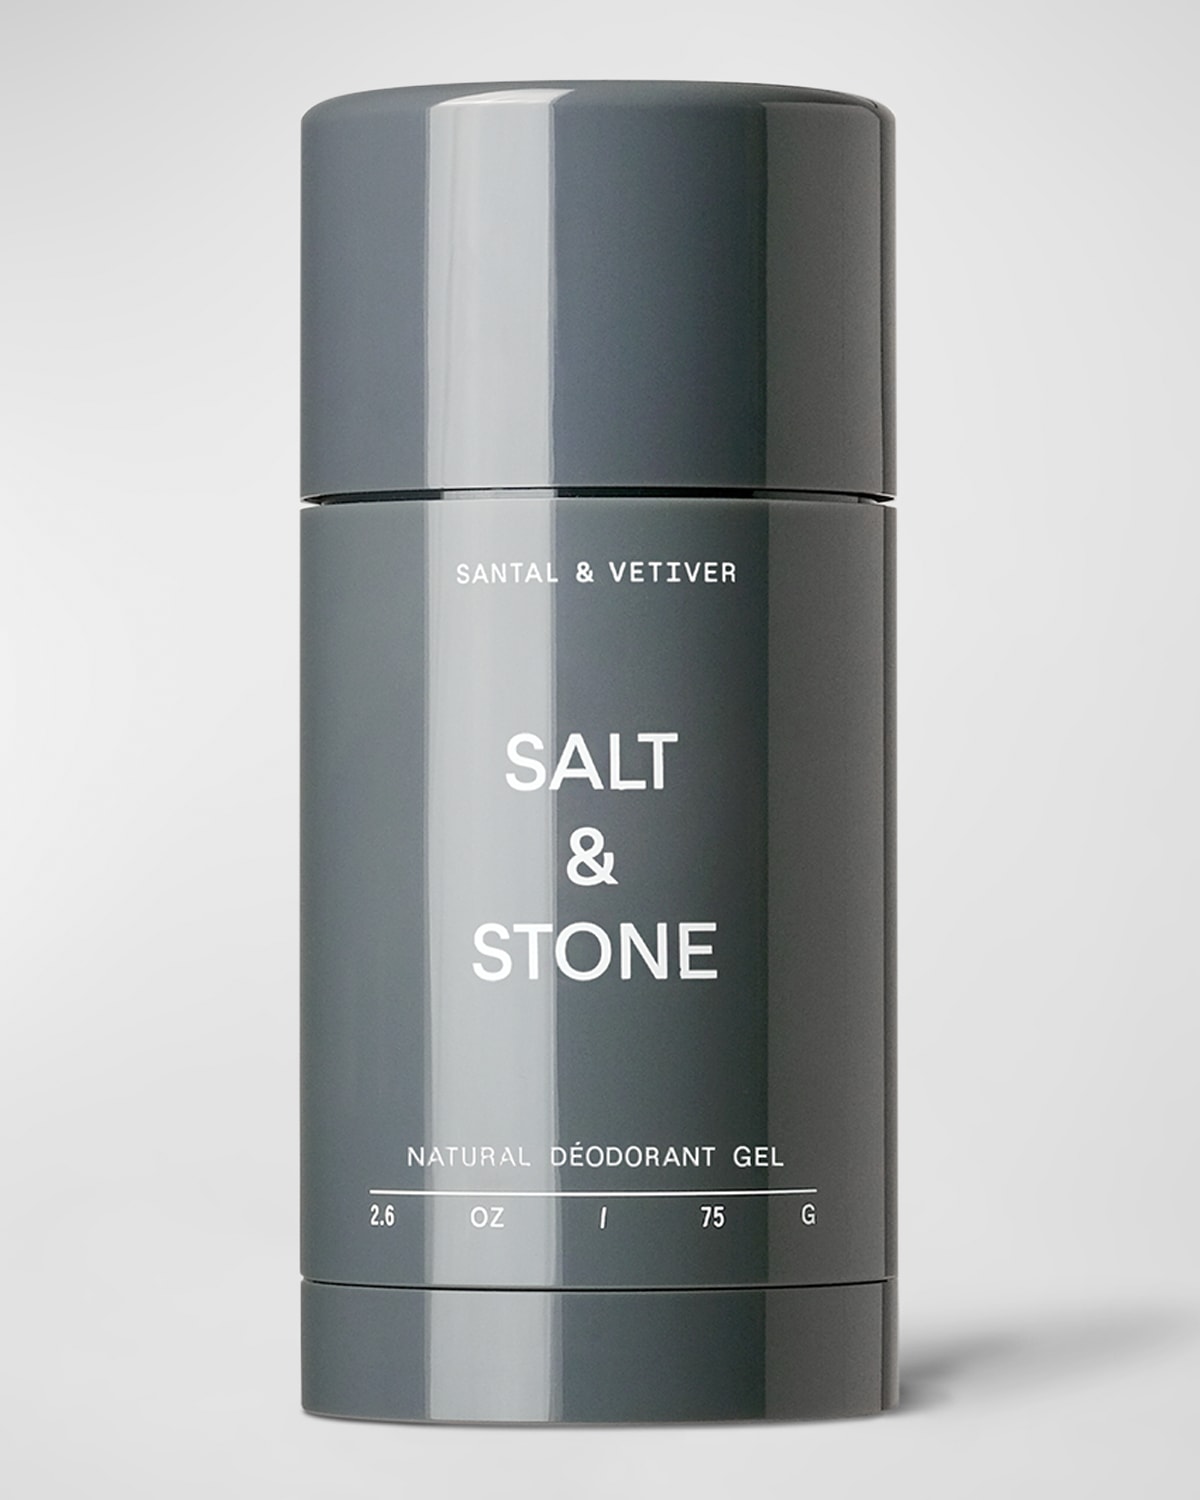 Shop Salt & Stone Natural Deodorant Gel, Santal & Vetiver